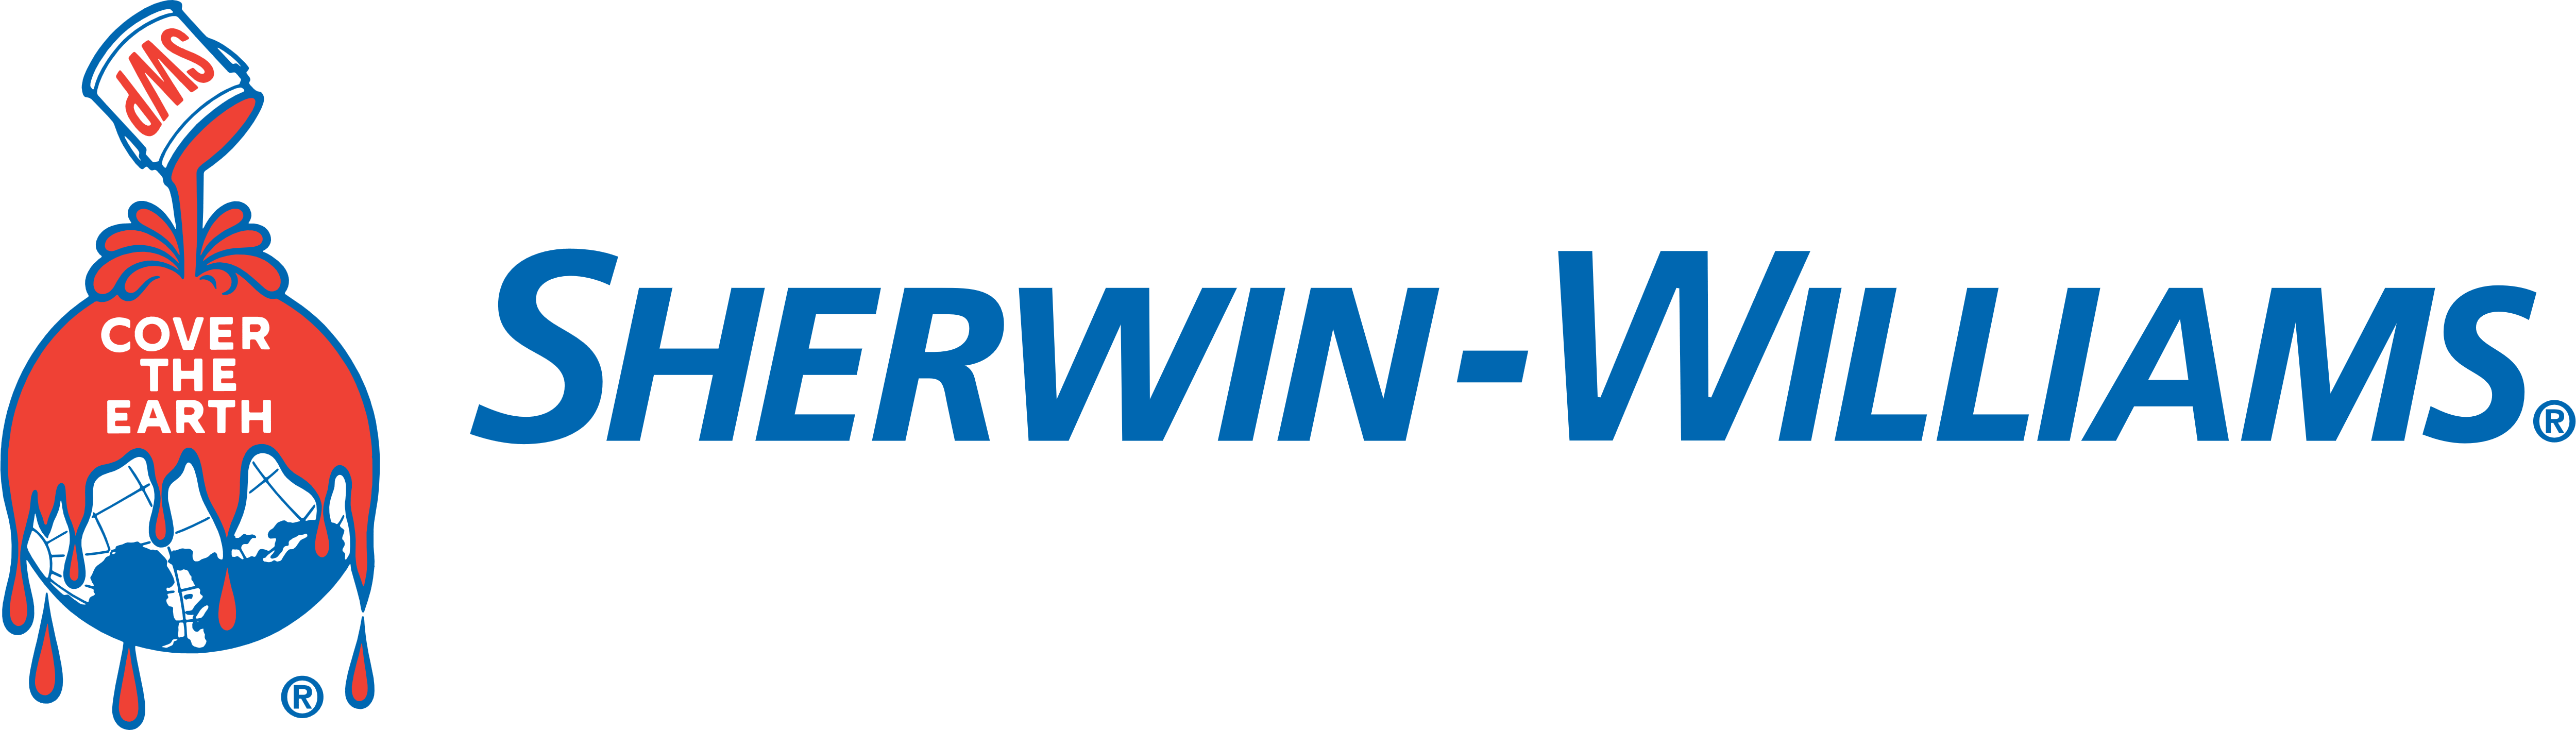 The Sherwin-Williams Company logo